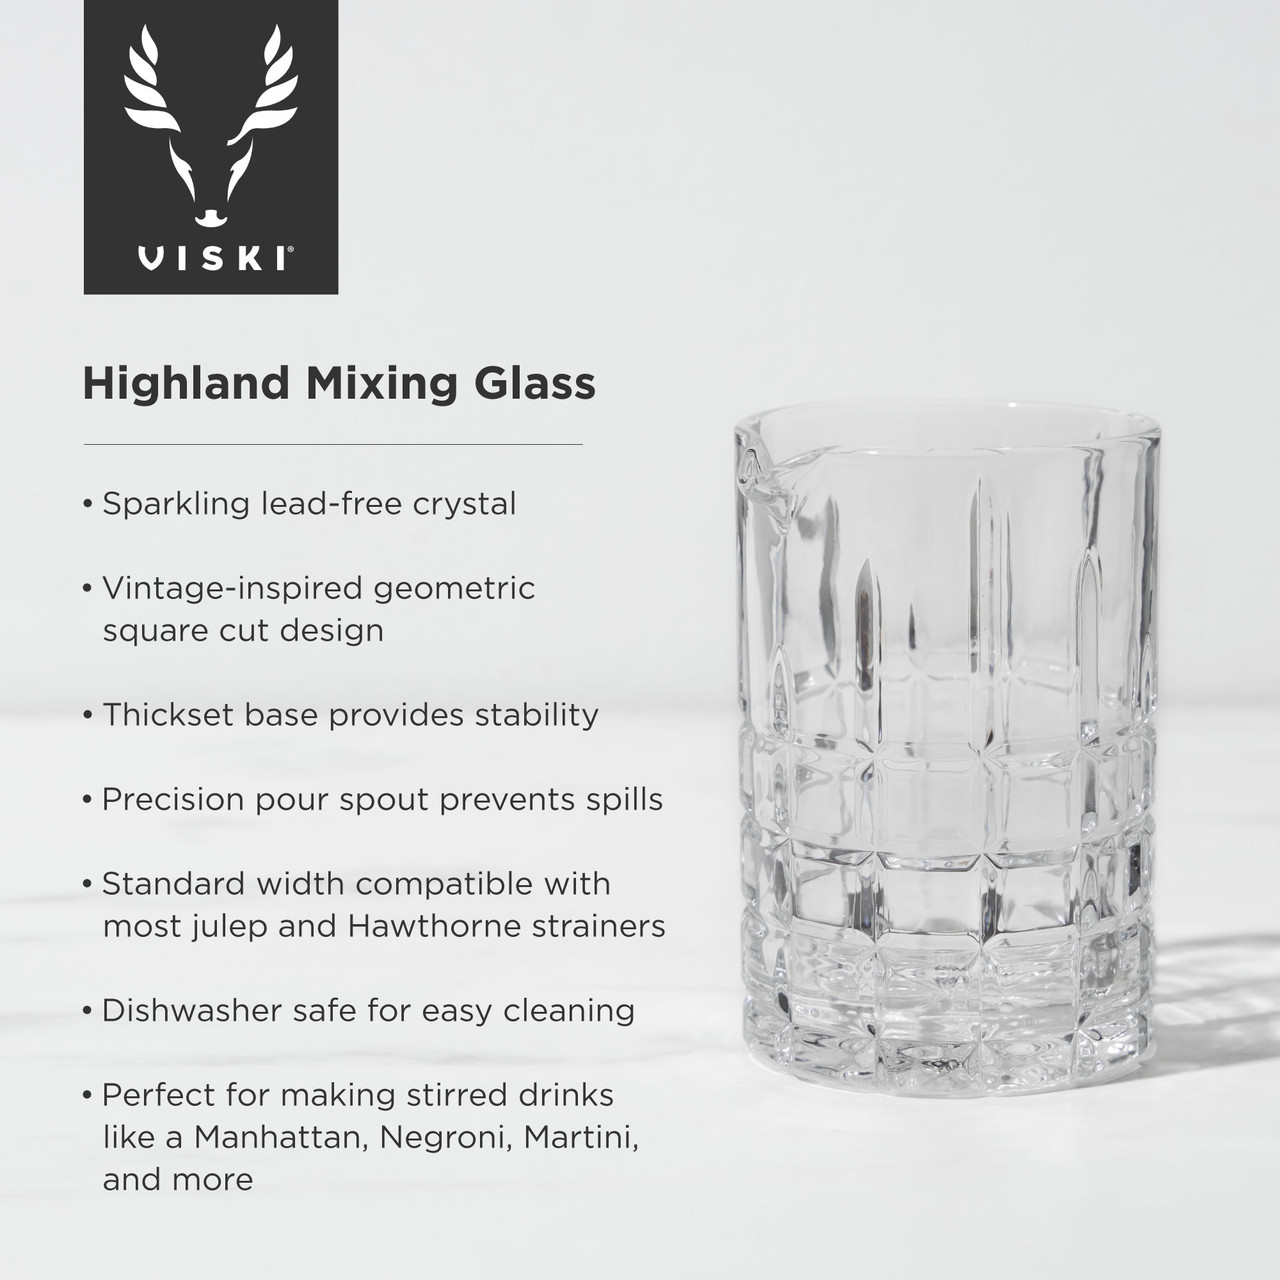 Highland Mixing Glass by Viski